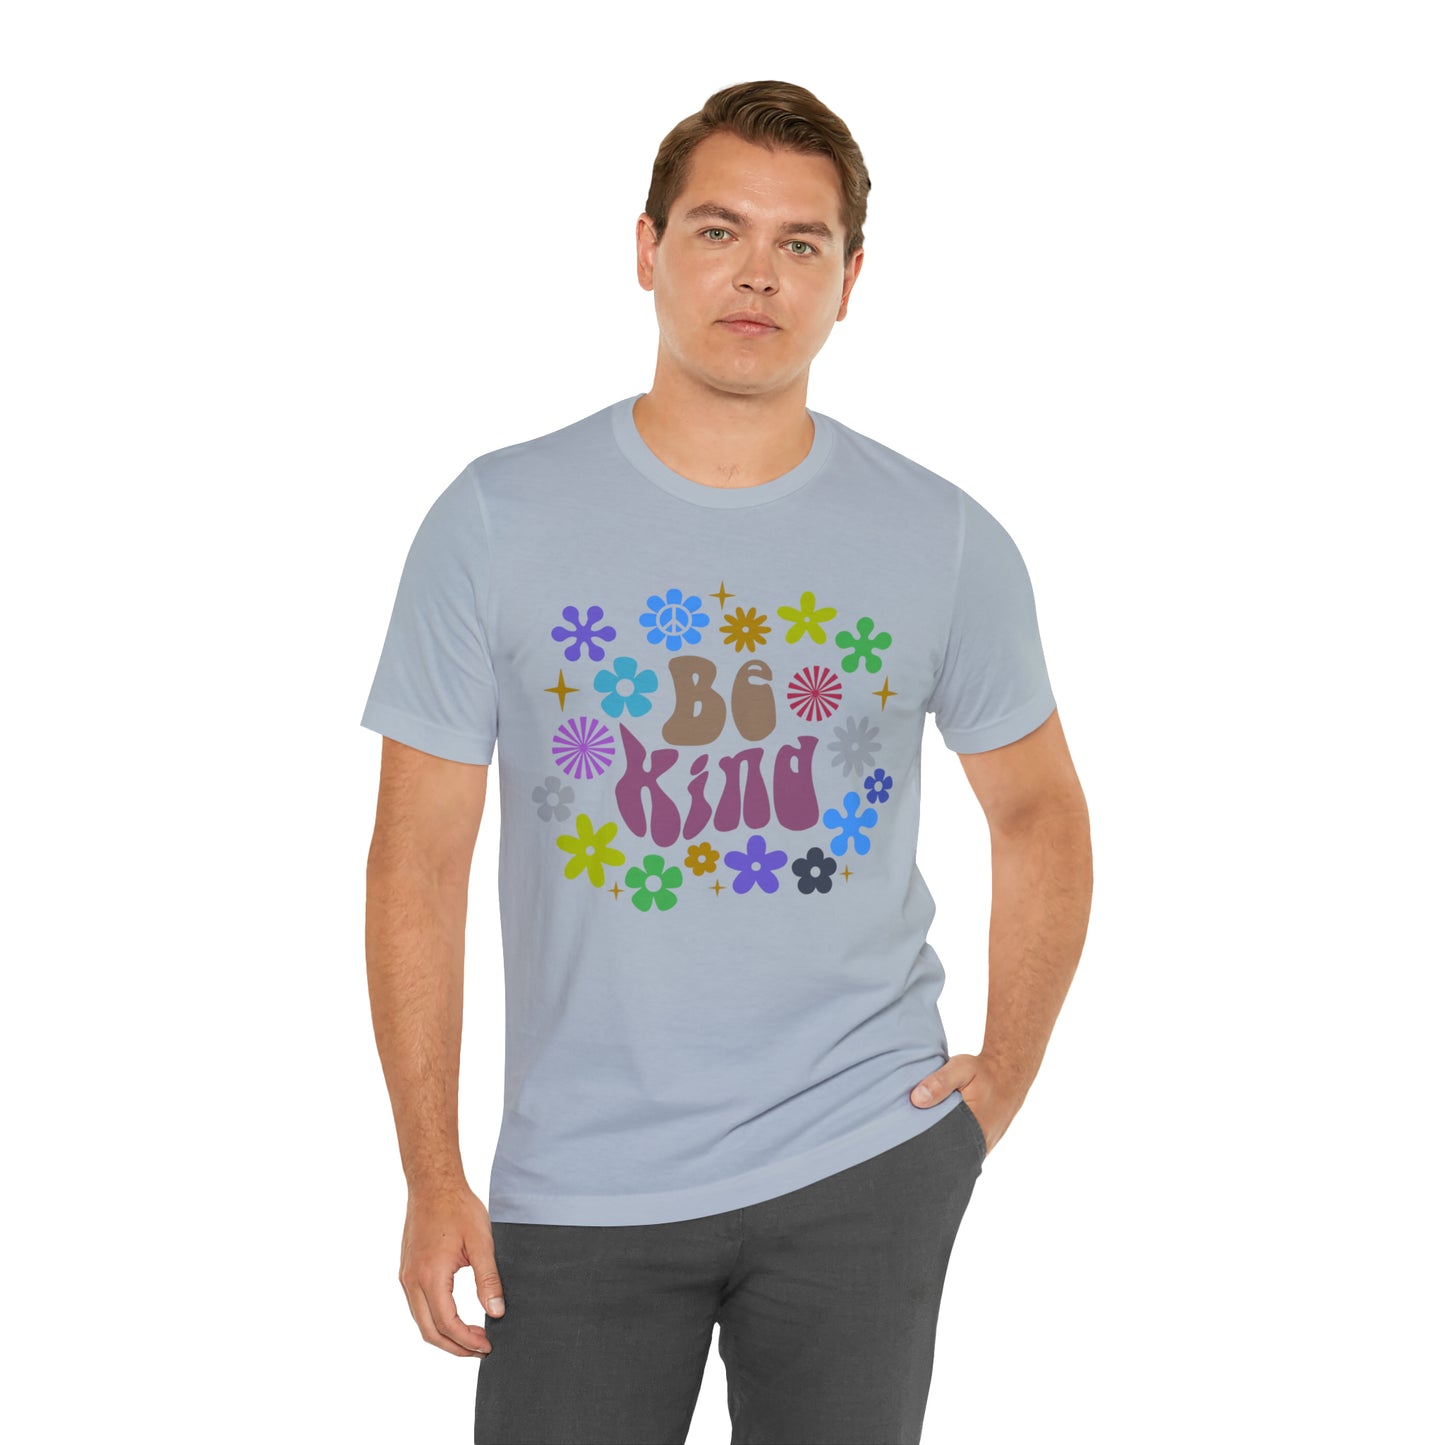 Be Kind To Your Mind Shirt, Kindness Shirt, Mental Health Awareness Shirt, Mental Health Shirt, Inspirational Shirt, T633